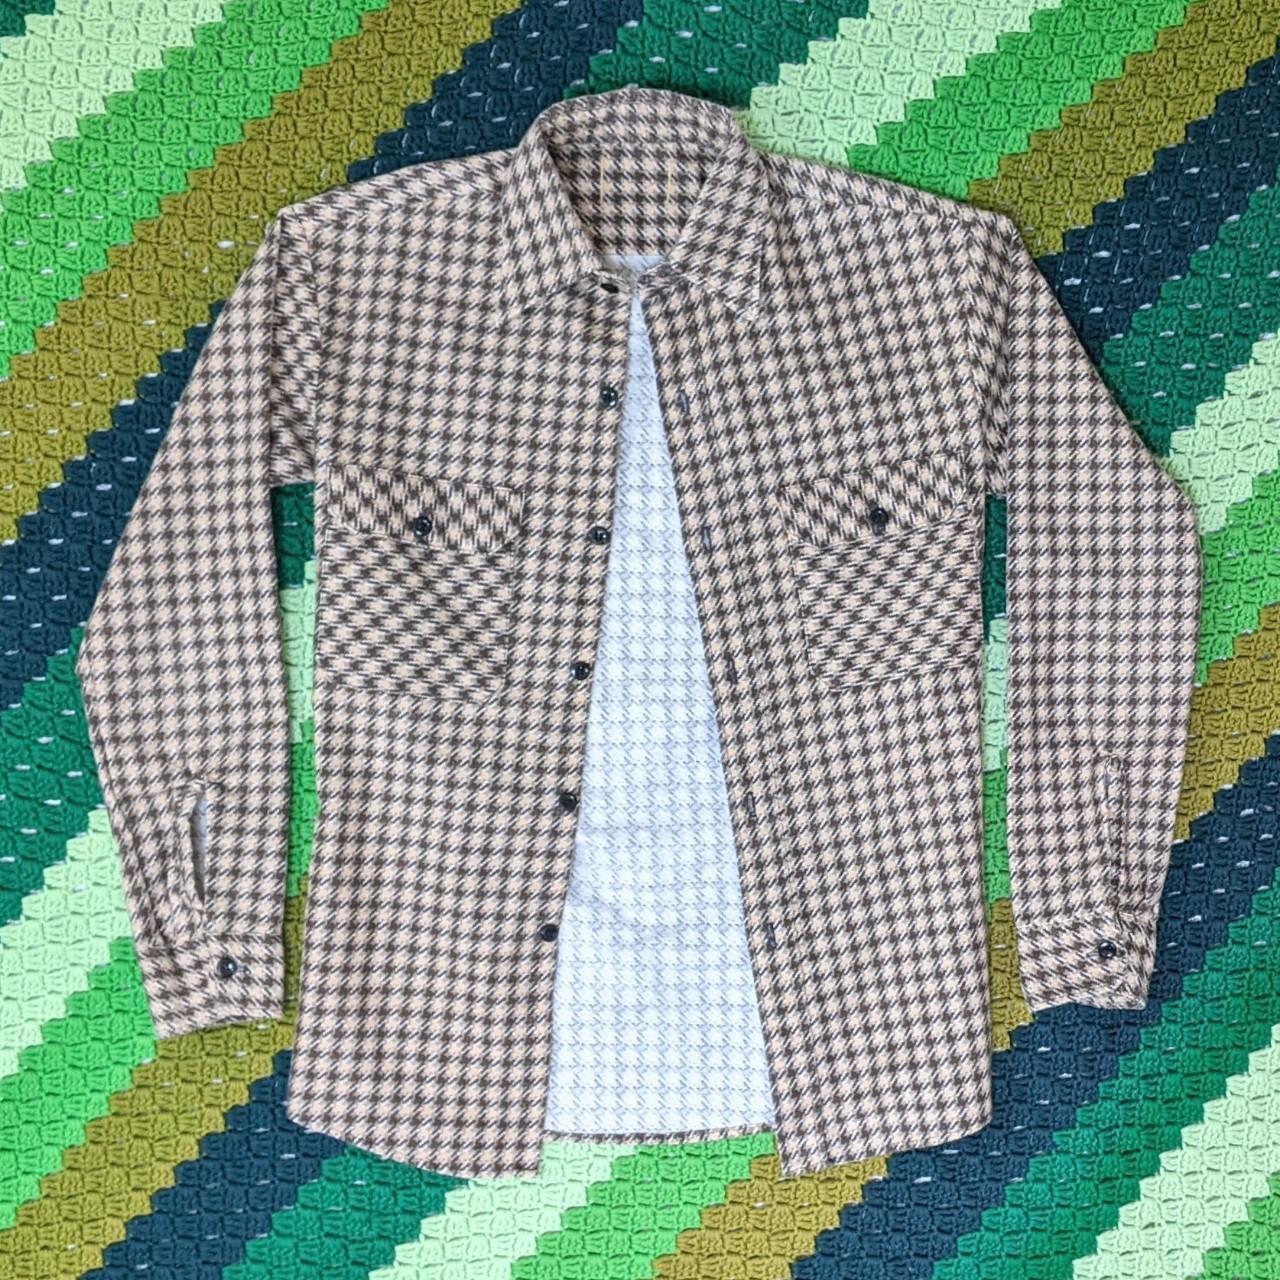 Product Image 2 - 🌲 Vintage 70s/80s flannel button